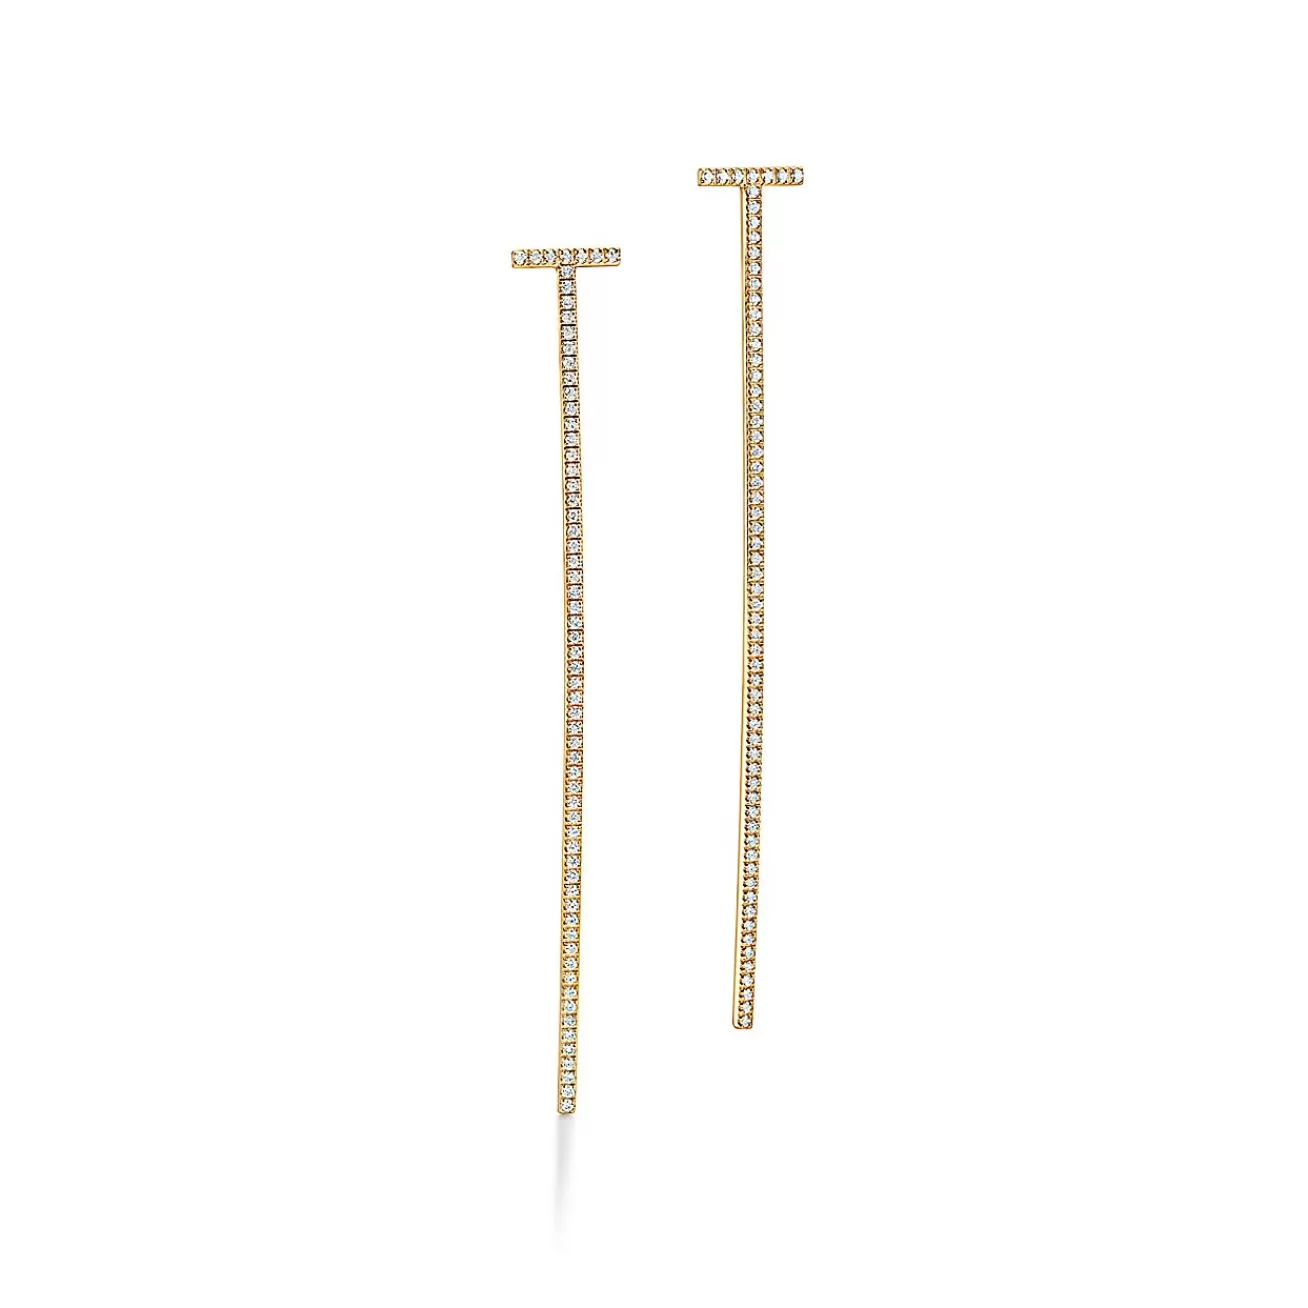 Tiffany & Co. Tiffany T elongated wire bar earrings in 18k gold with diamonds. | ^ Earrings | Gold Jewelry